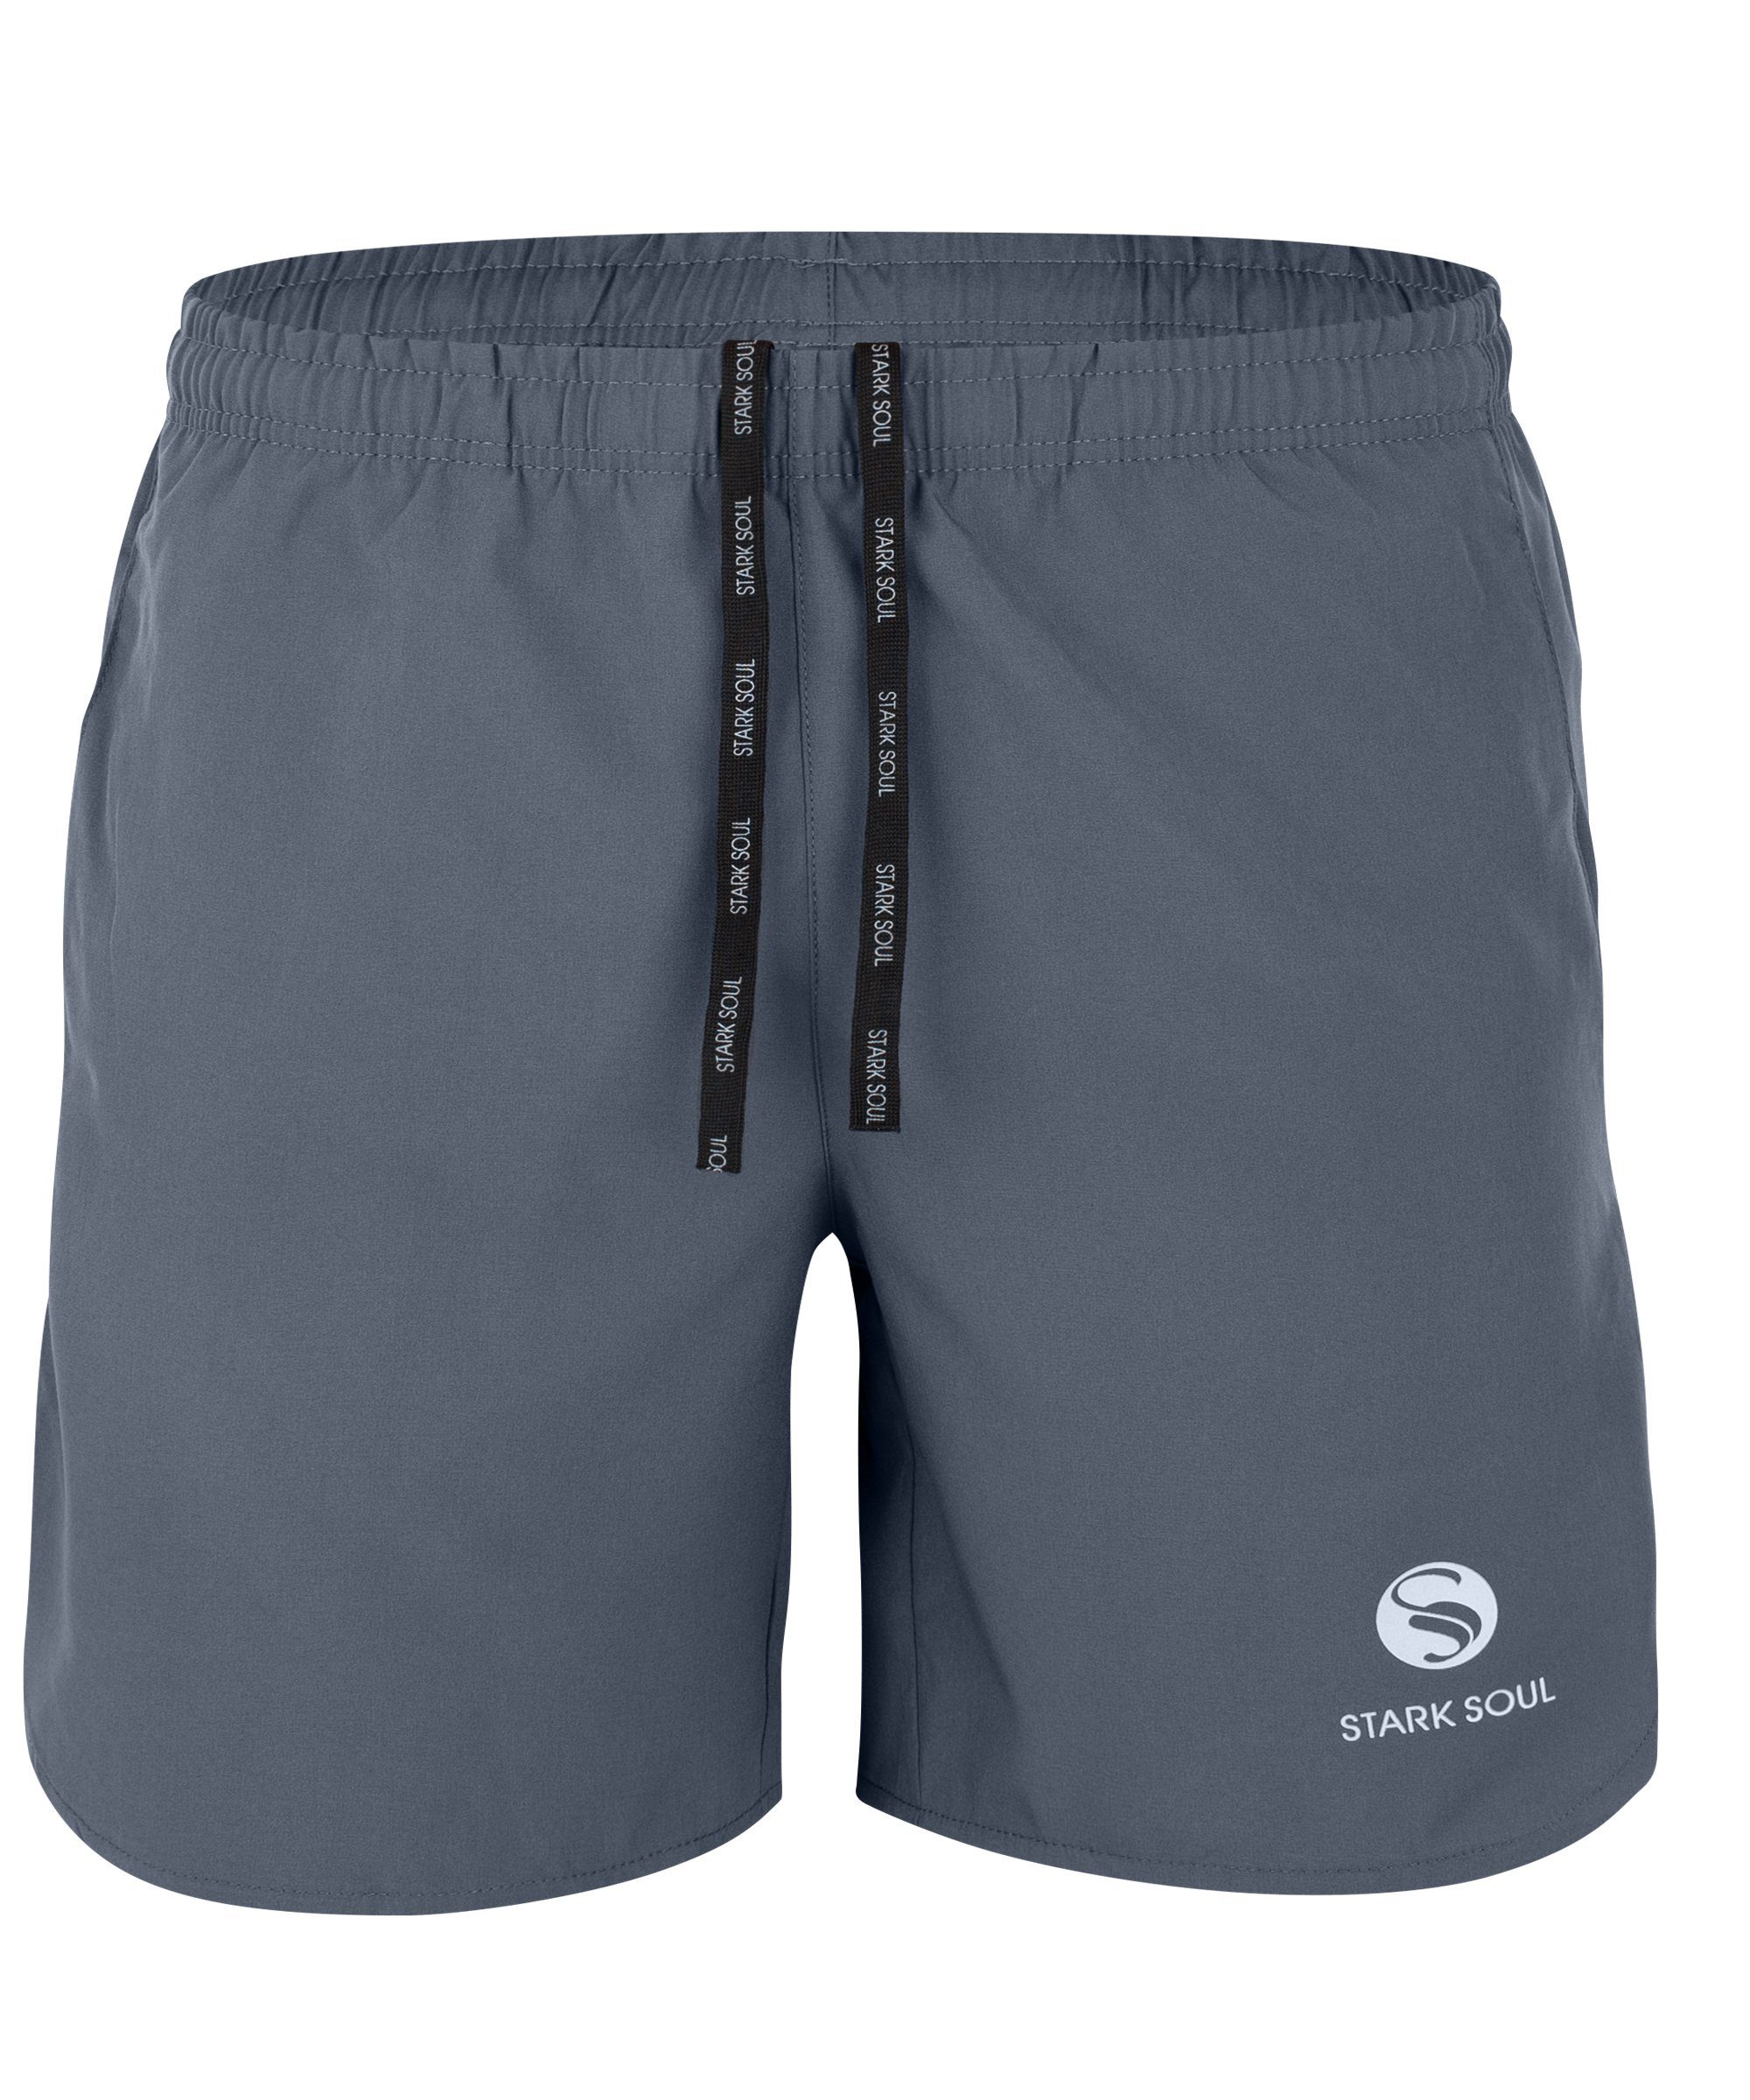 Stark Soul® Funktionshose kurze Sporthose aus Quick Dry Material - Schnelltrocknend Grau